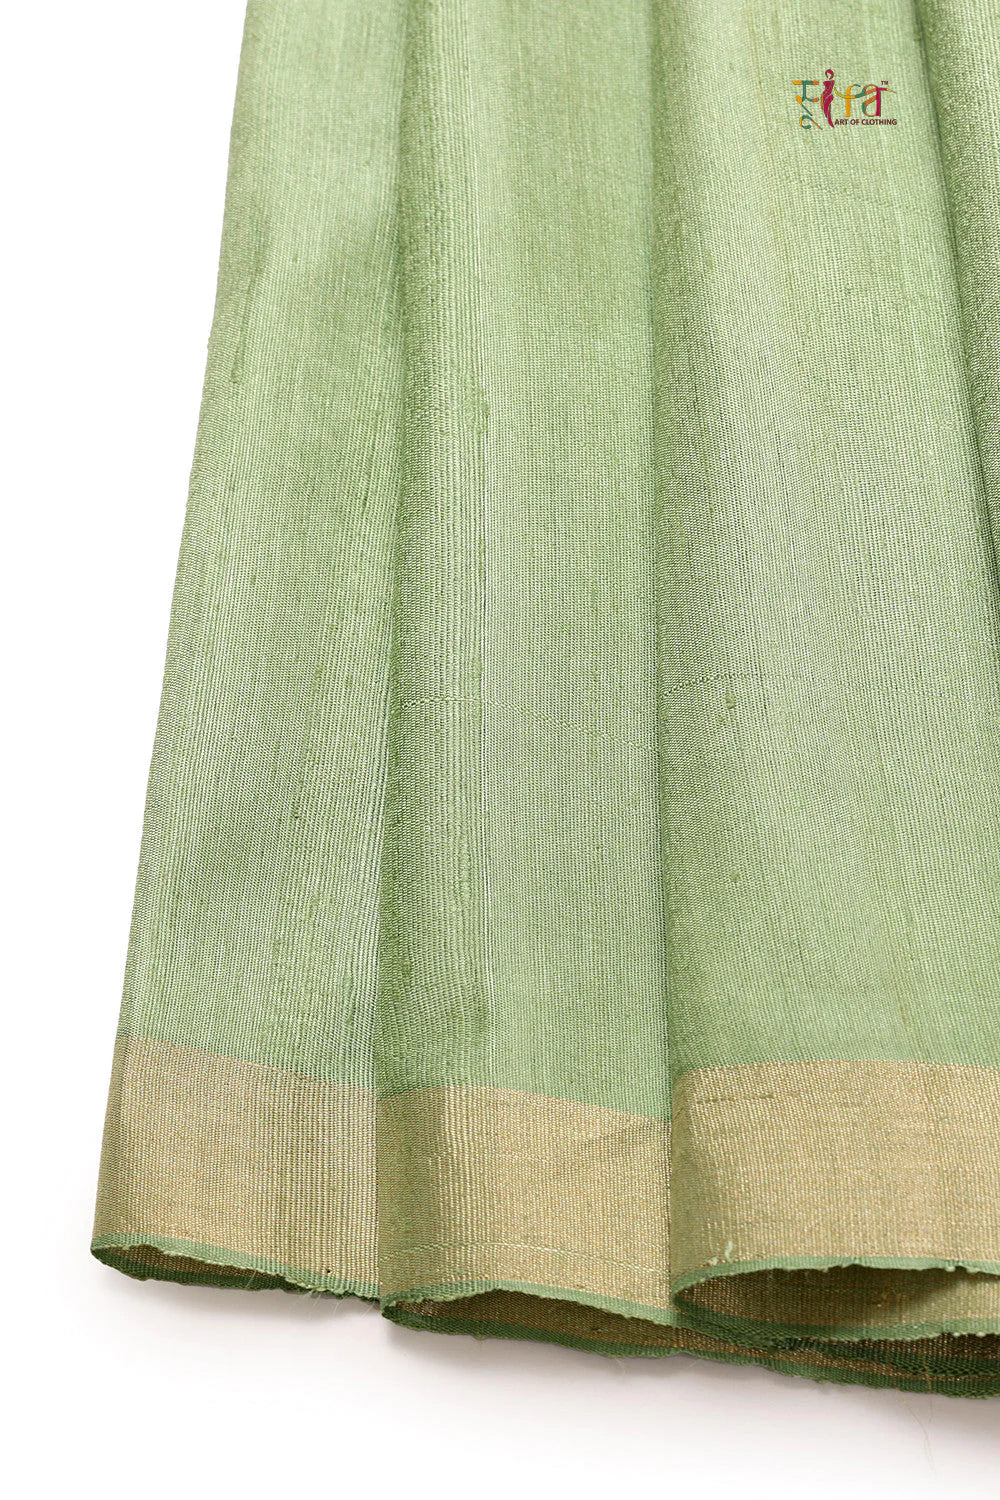 Handloom Pistachio Green Pure Tussar Silk Kanchi Saree with Zari Border